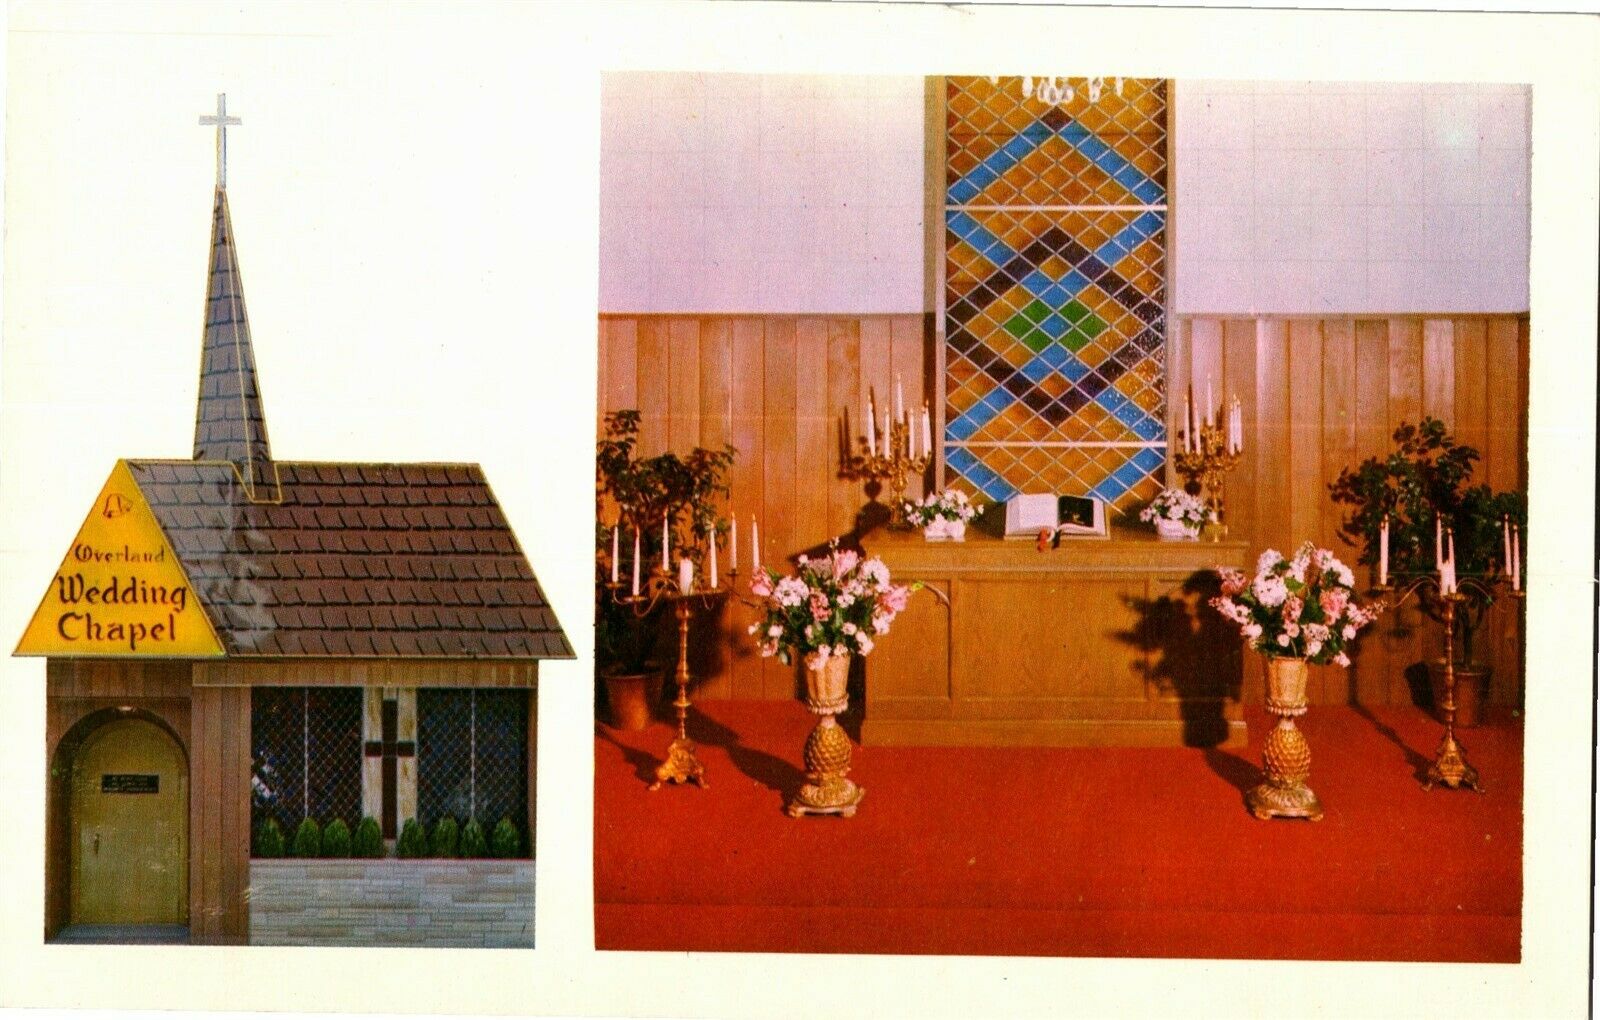 Overland Hotel Wedding Chapel, North Center St Reno Nv Vintage Postcard A64